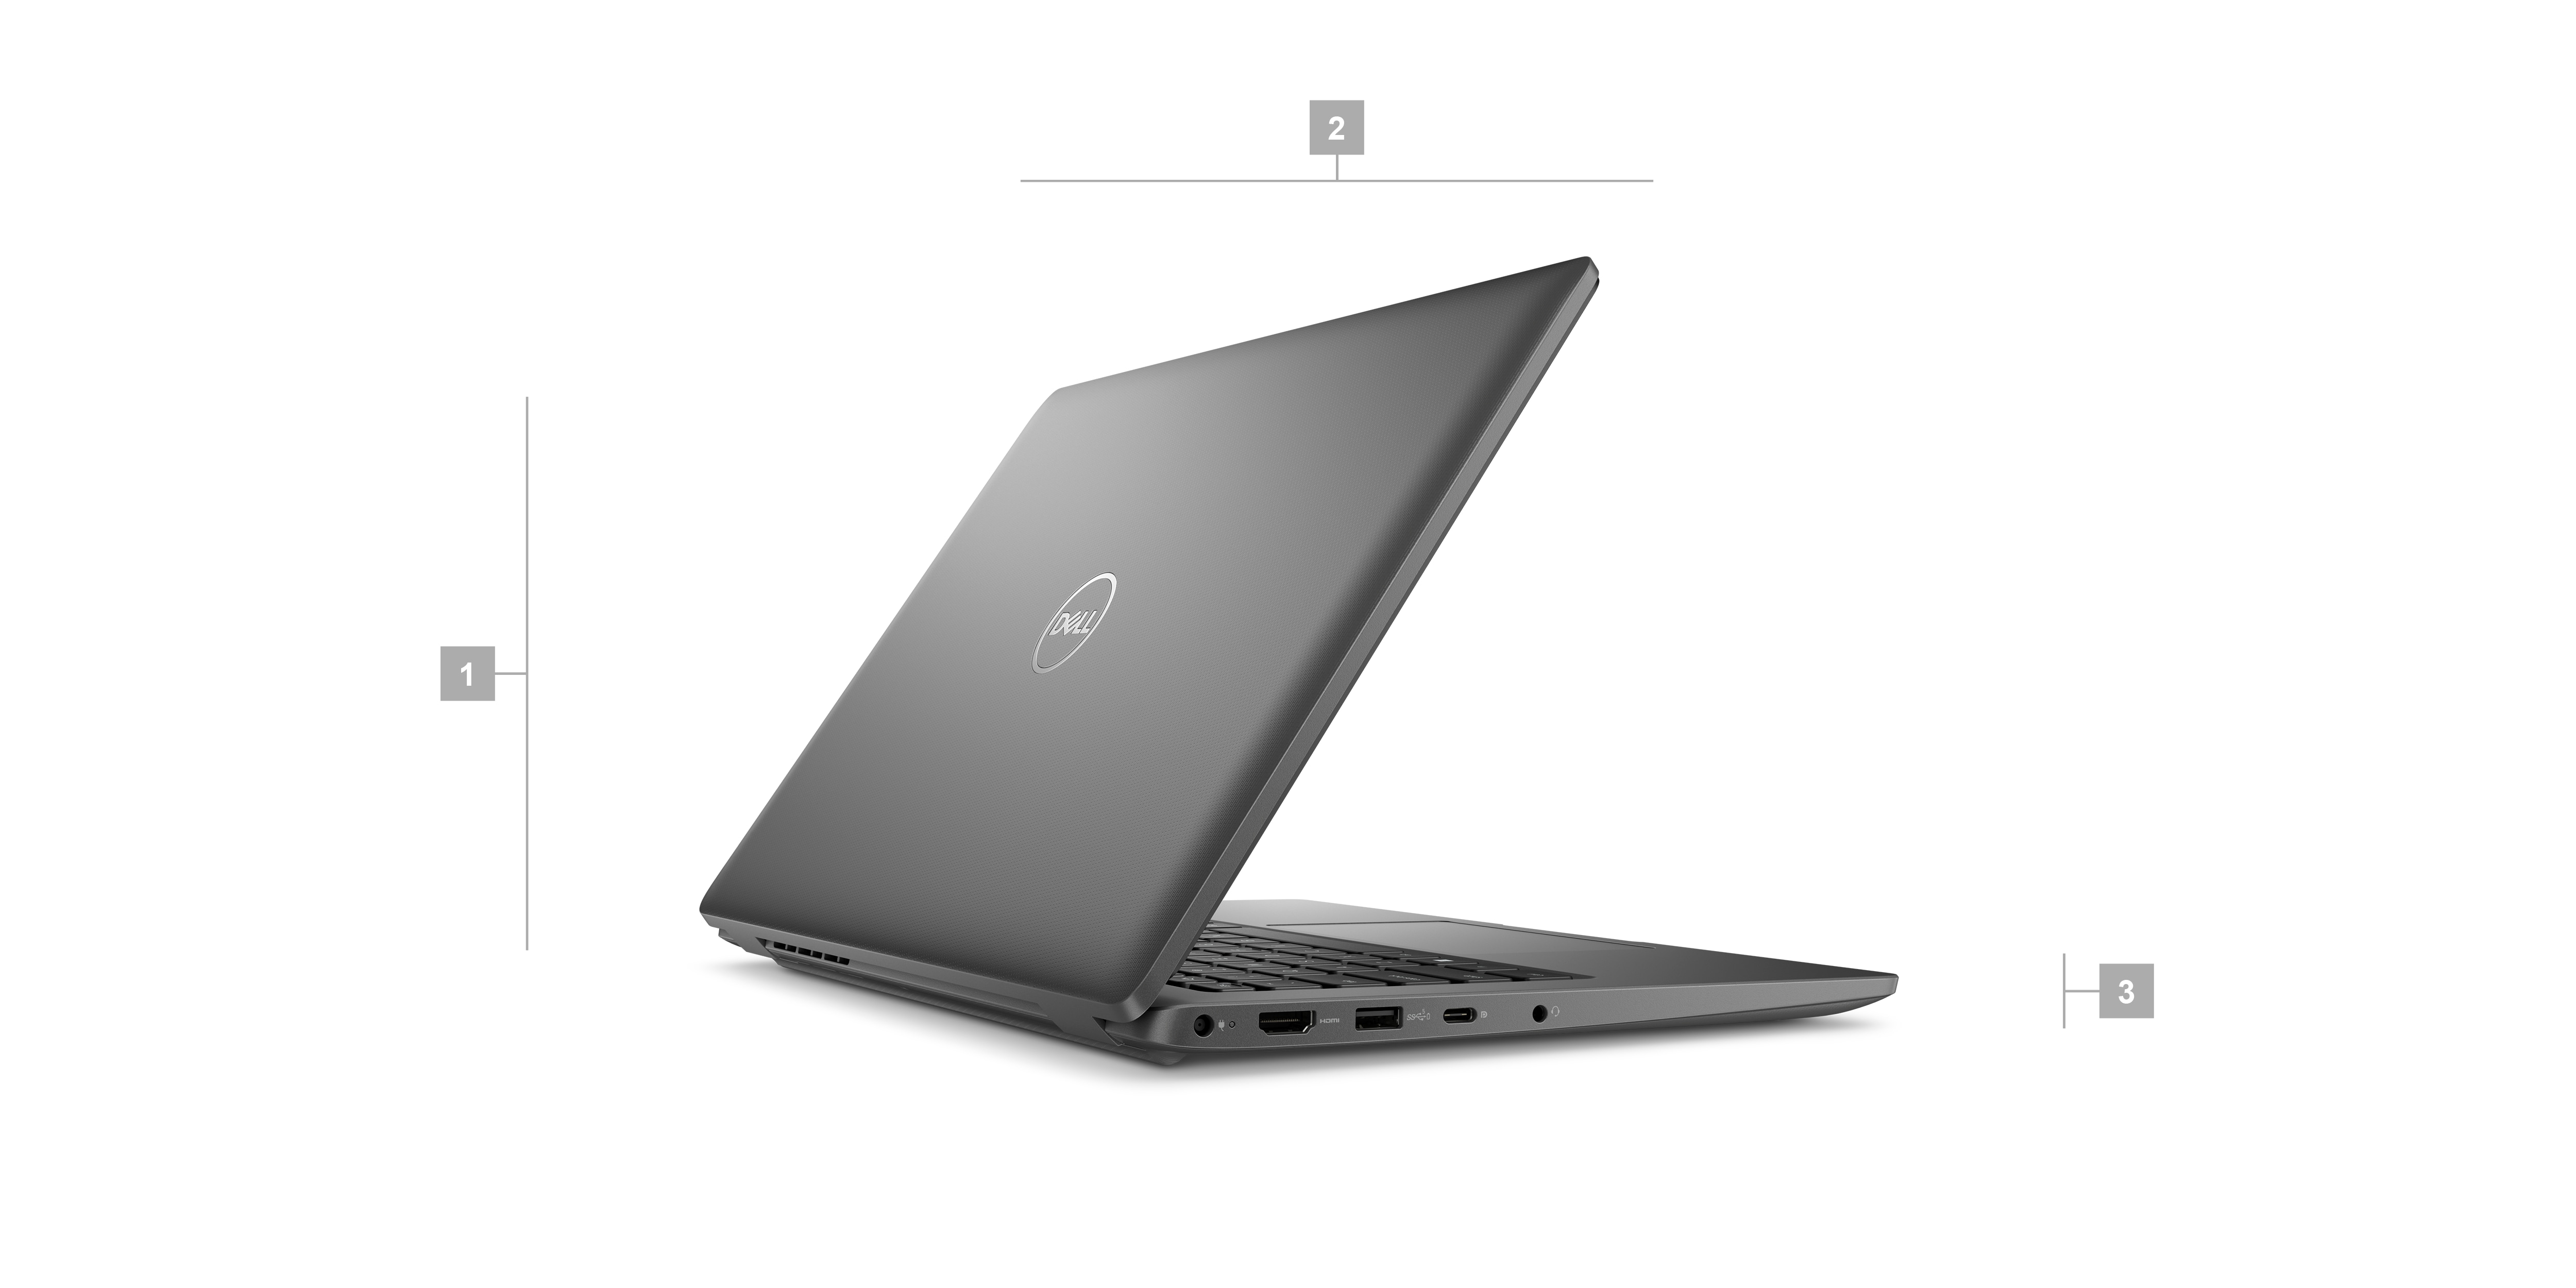 Dell Latitude 3440 노트북에 표시된 제품 크기 및 중량을 나타내는 1~3의 숫자